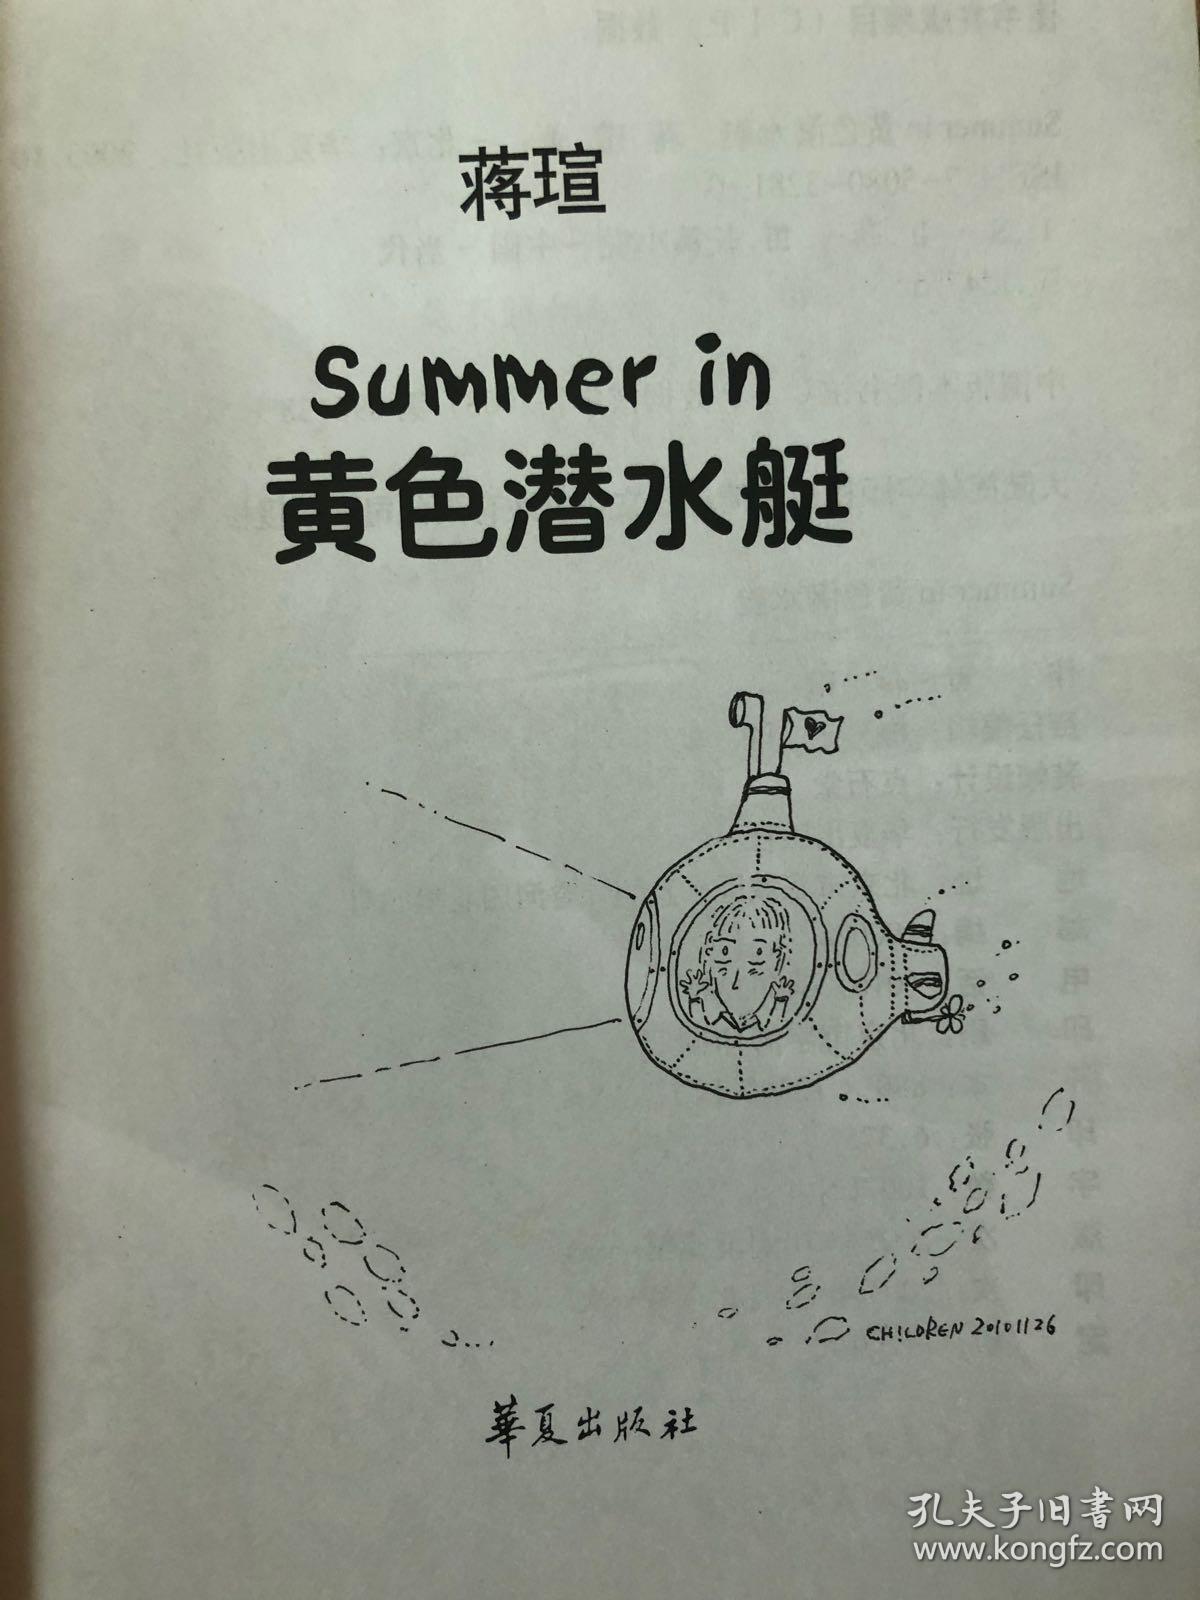 Summer in黄色潜水艇